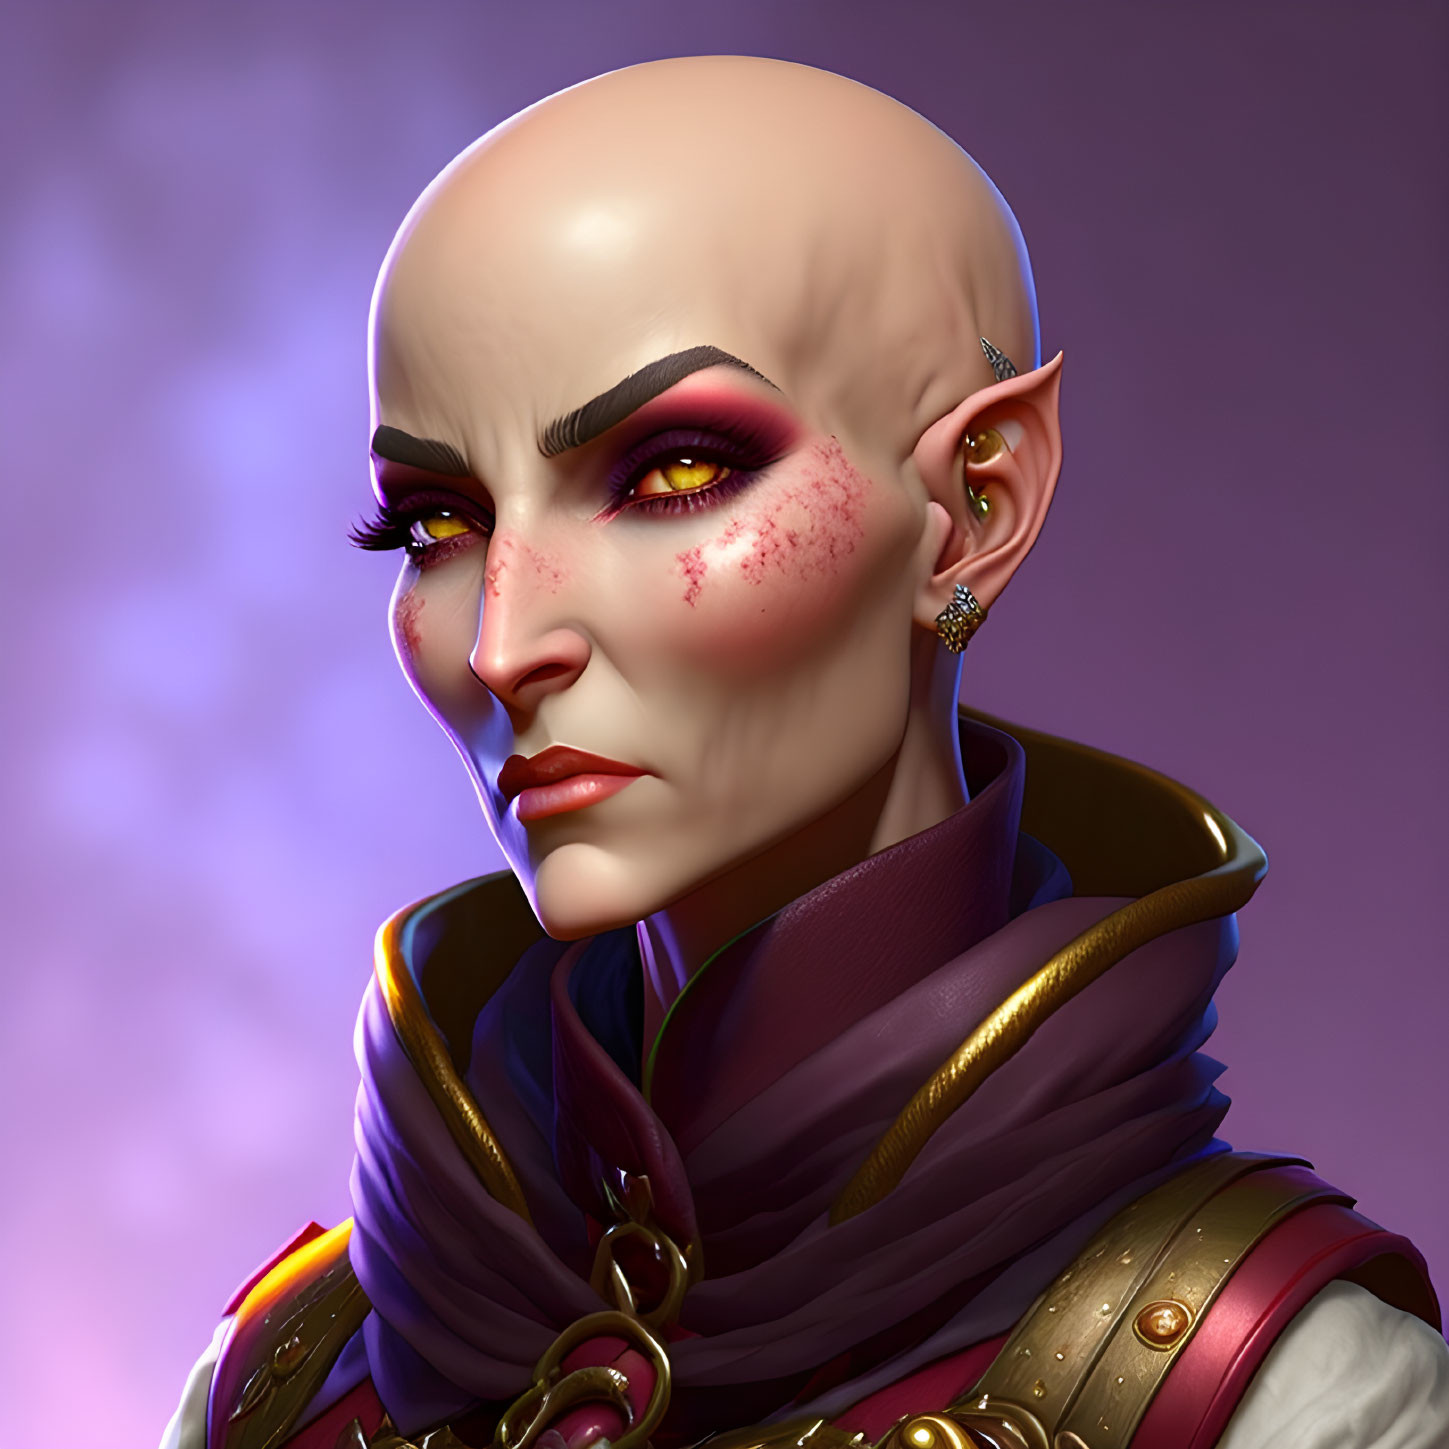 Bald Female Elf Portrait with Purple Eyeshadow